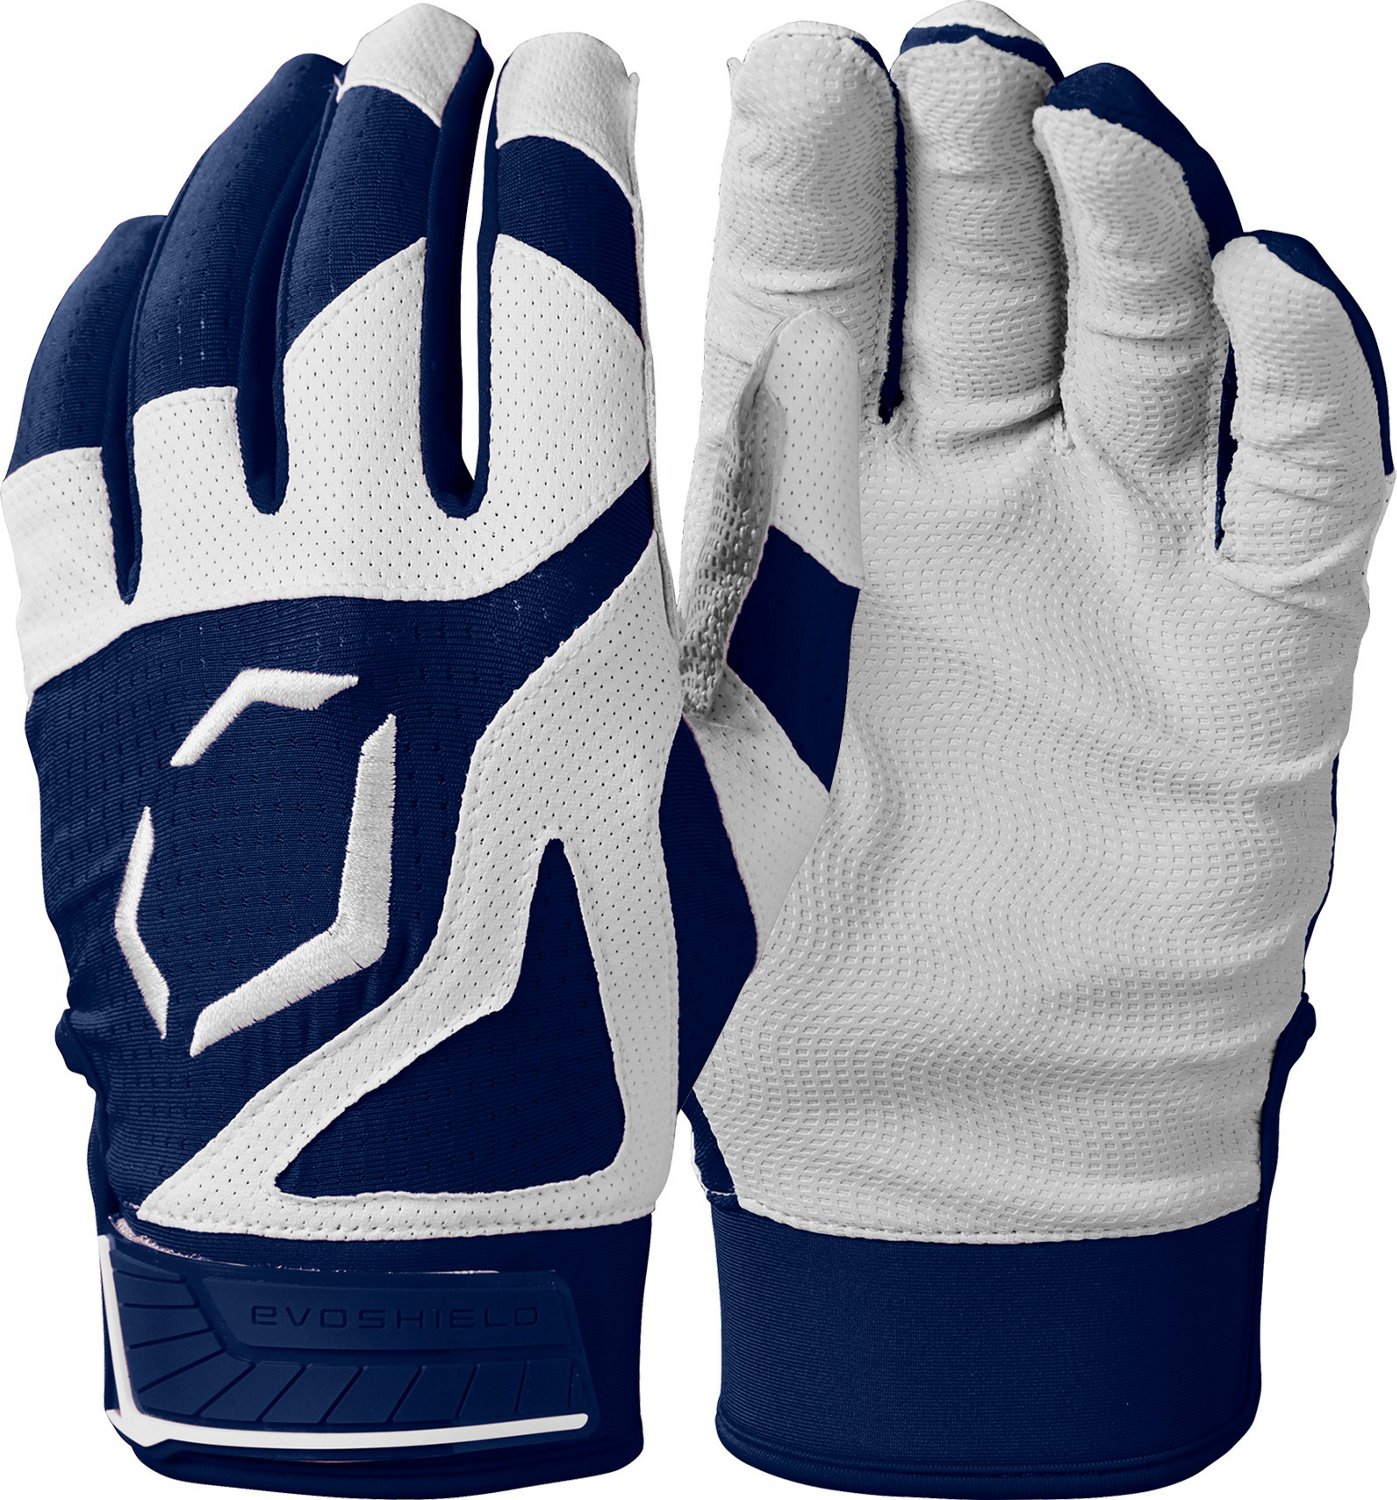 Evoshield SRZ-1 Adult Batting Gloves, Navy - Large